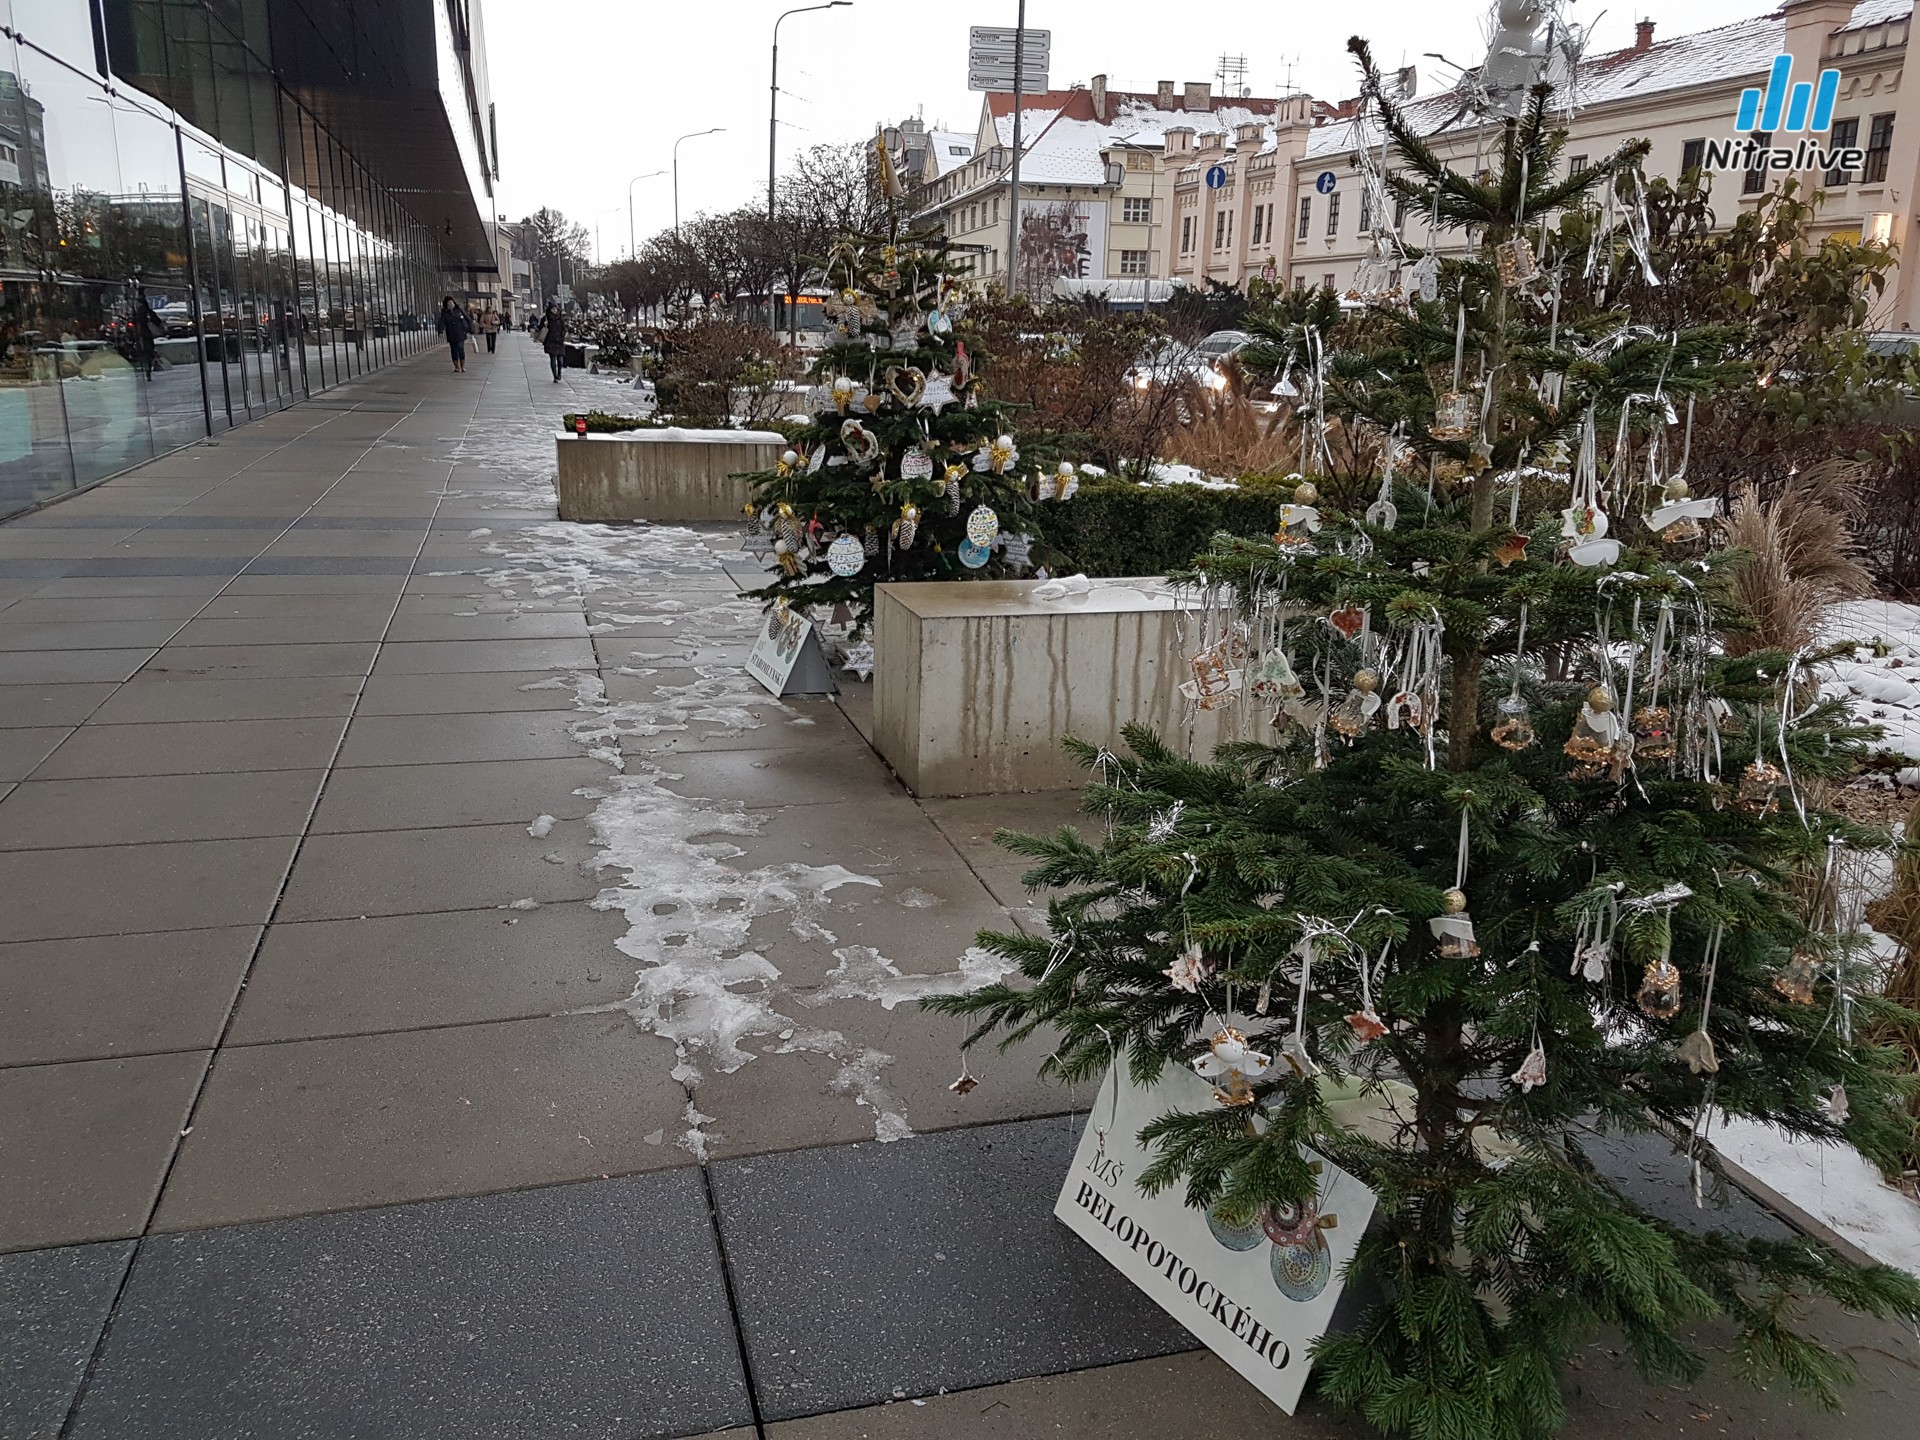 Deti z materských škôl v Nitre zdobili vianočné stromčeky, hlasujte za najkrajší